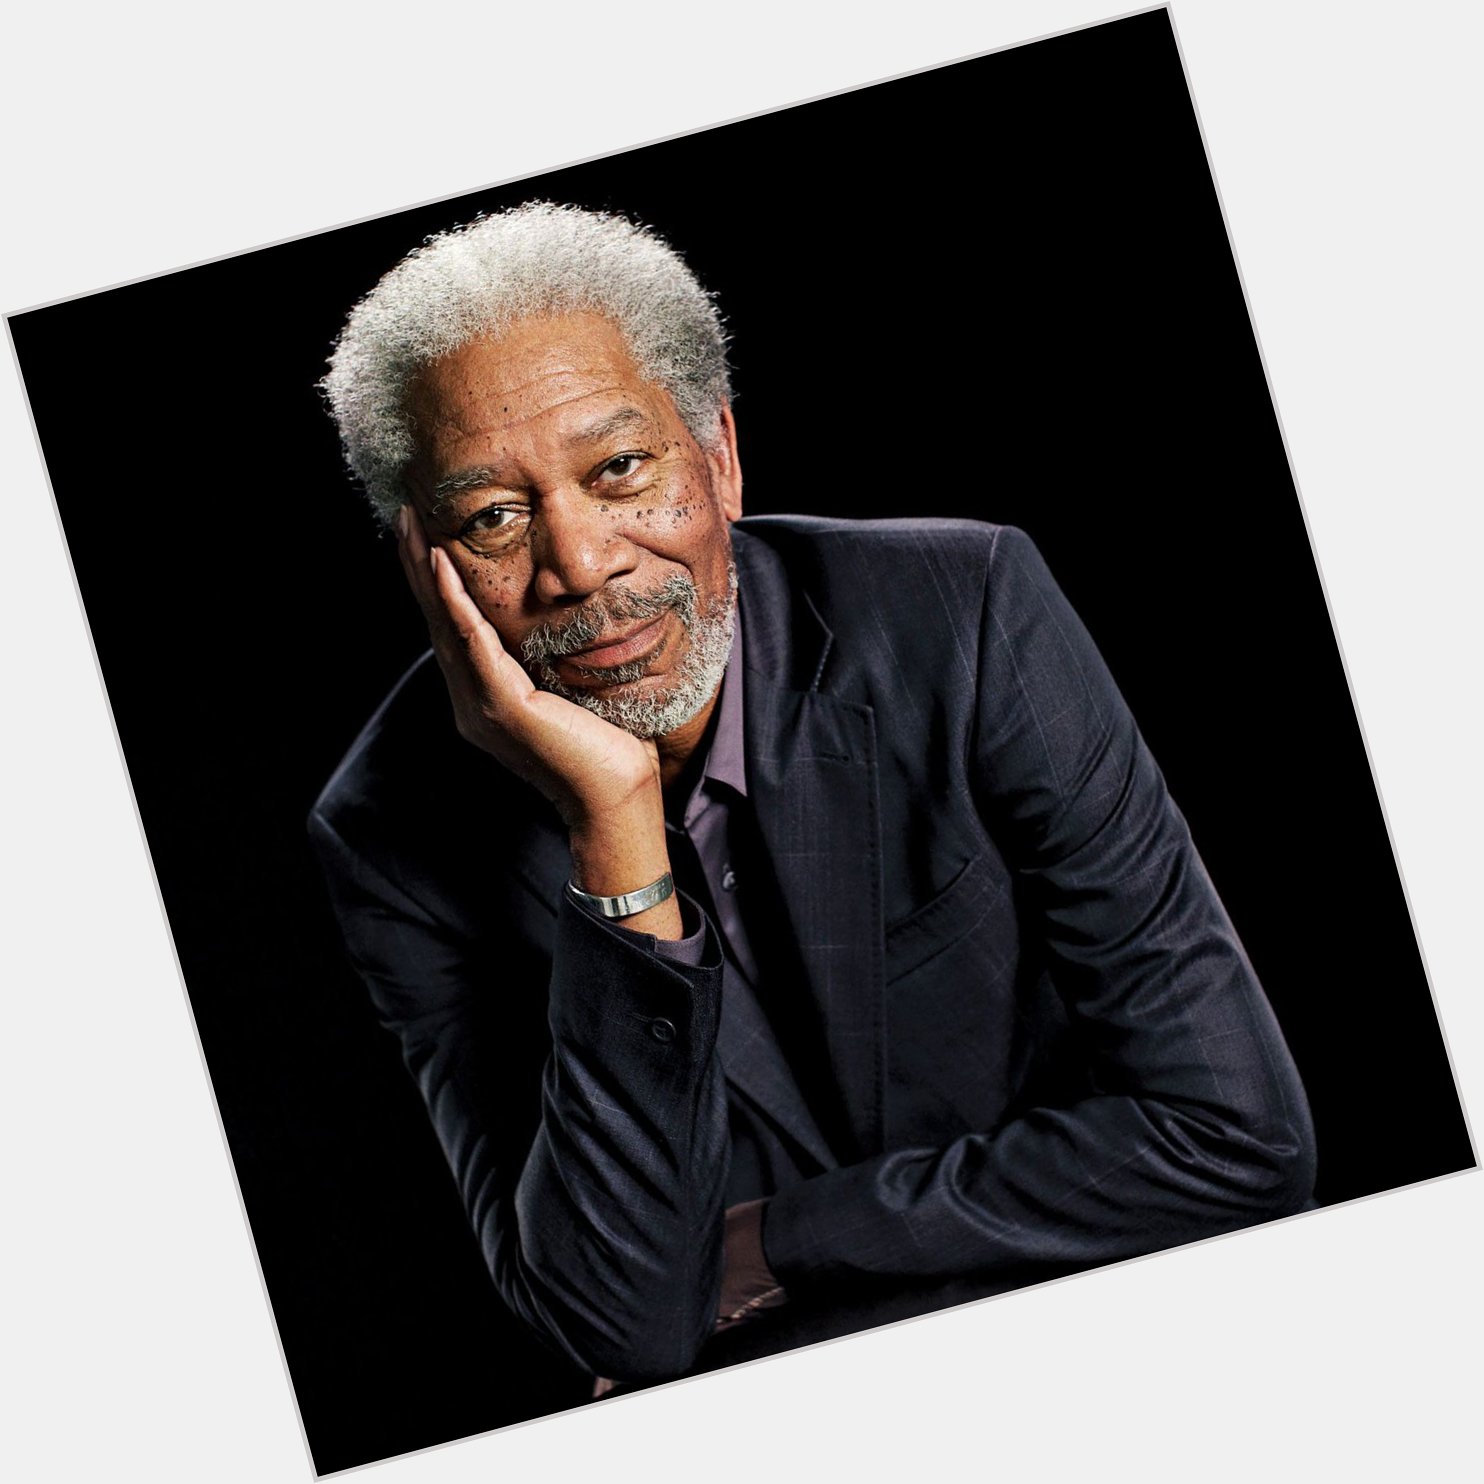 Speaking of legends, Happy Birthday to Morgan Freeman! 